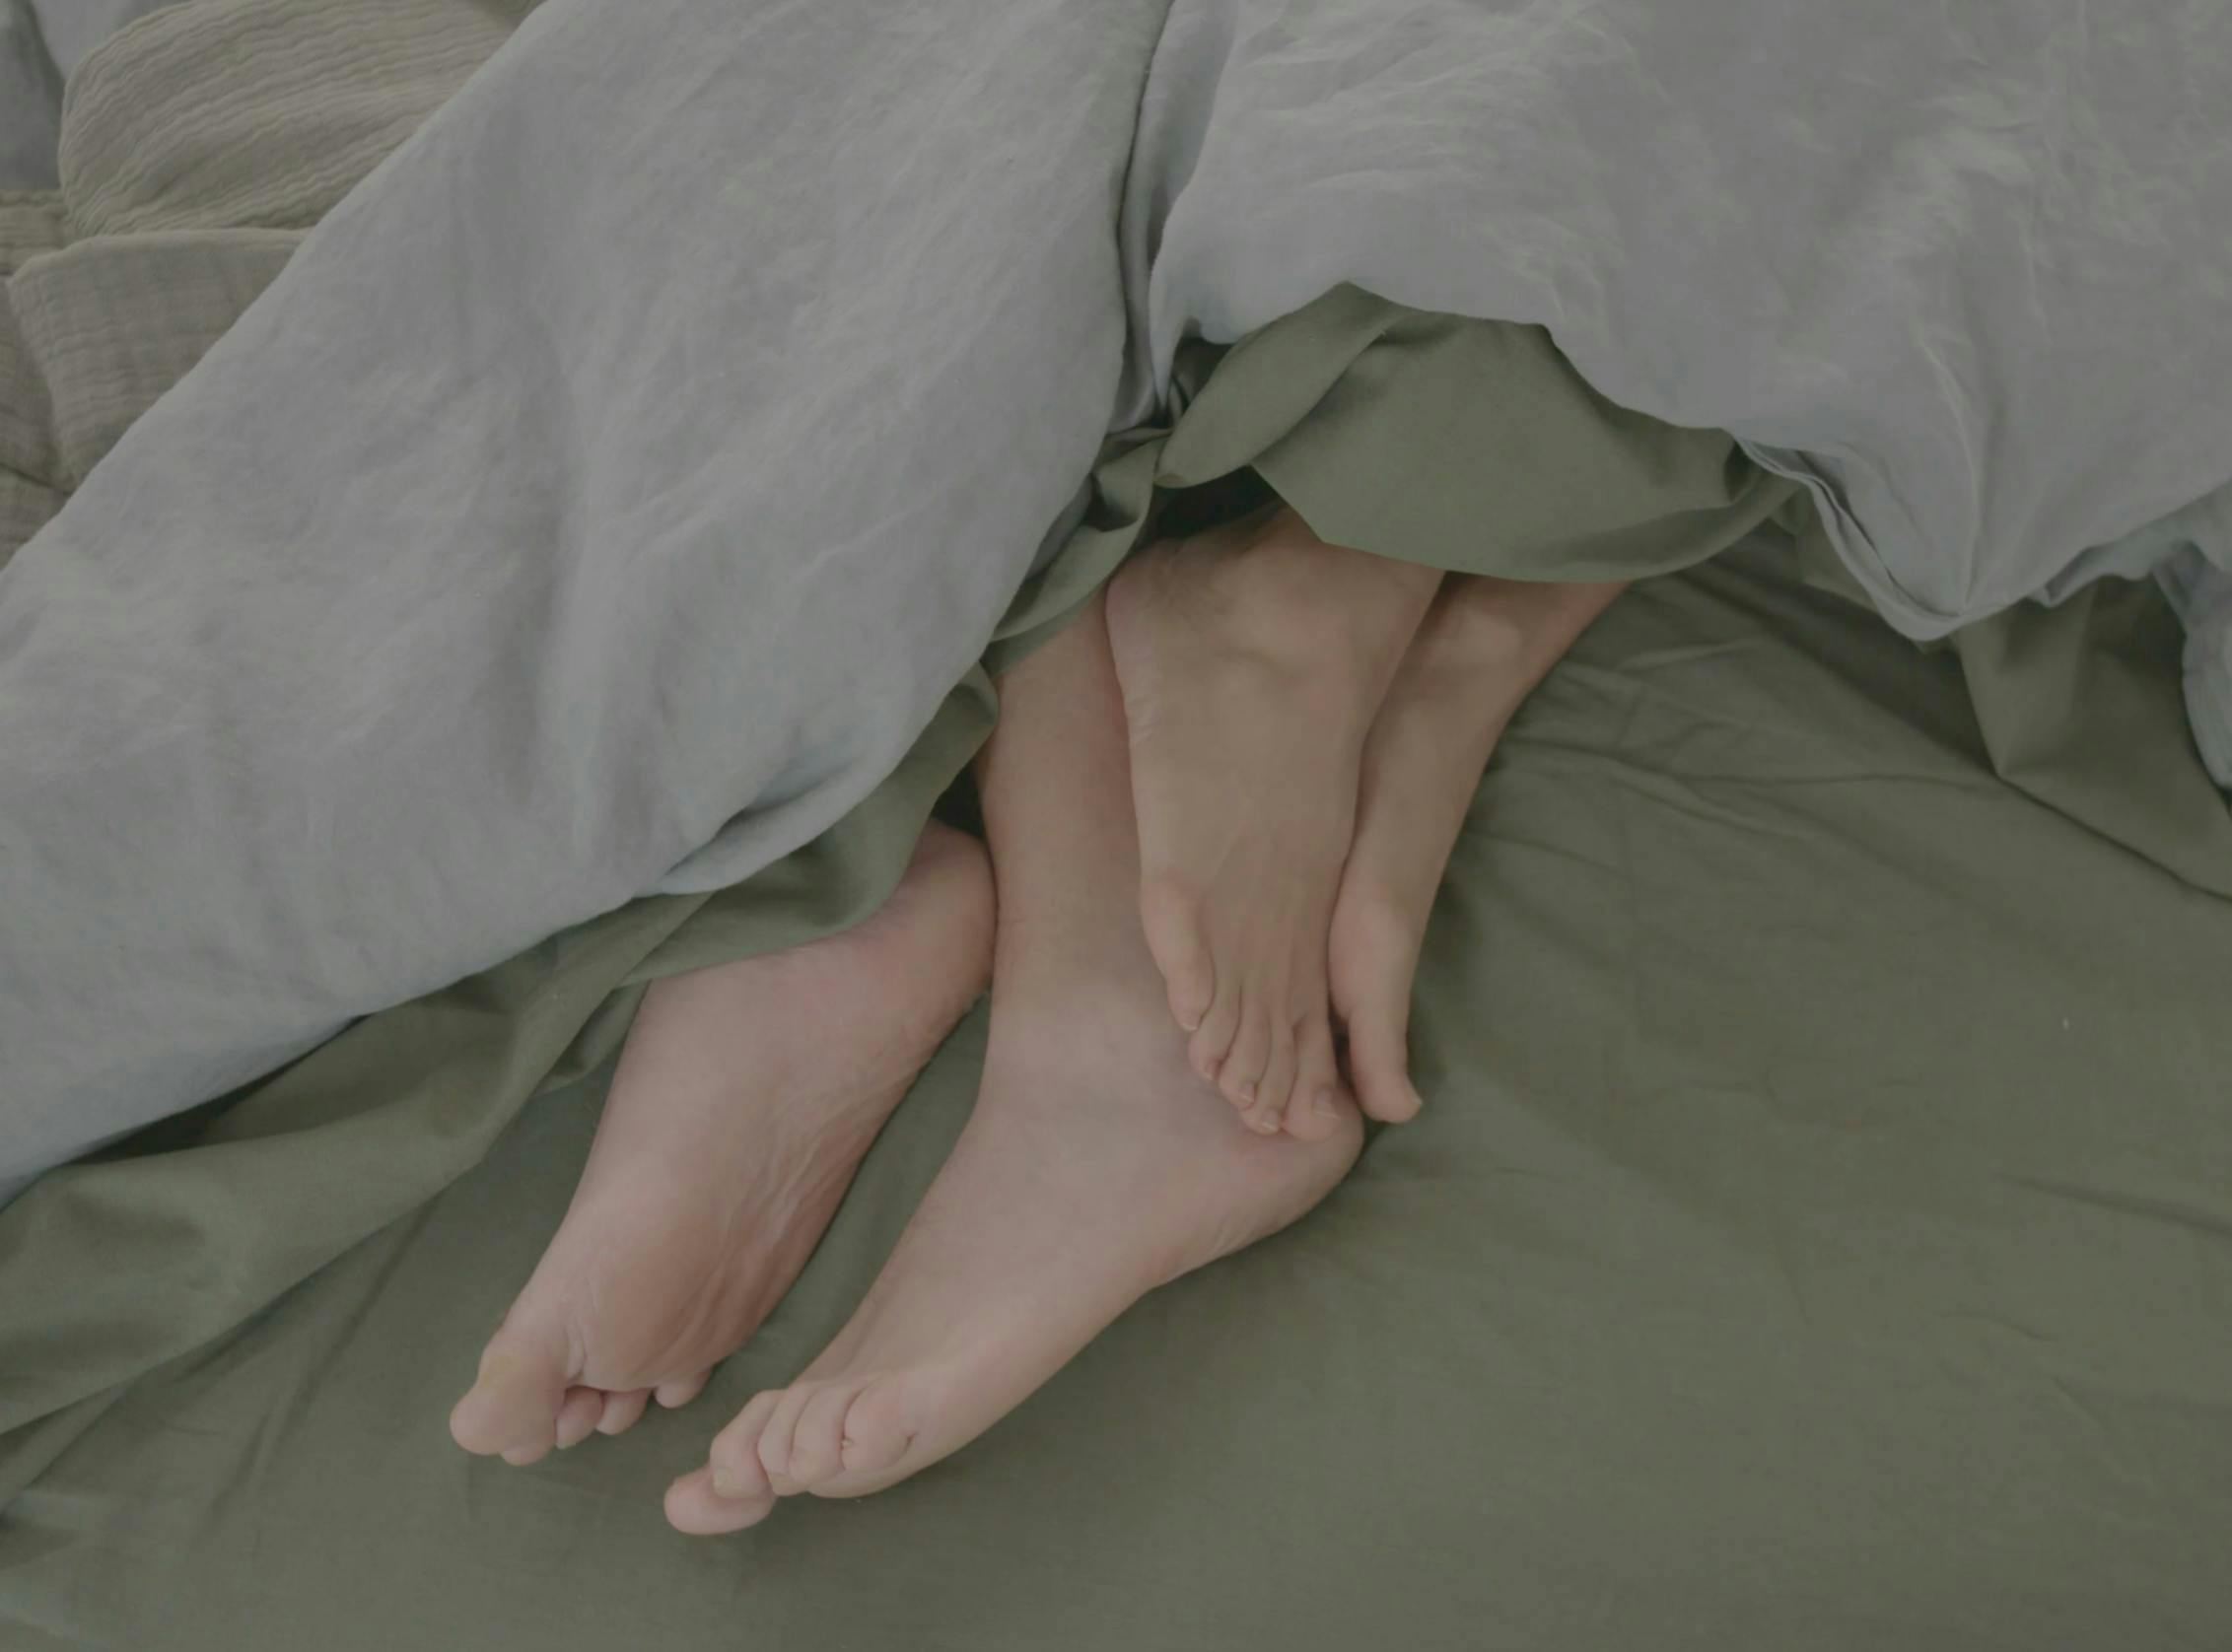 feet touching under sheets